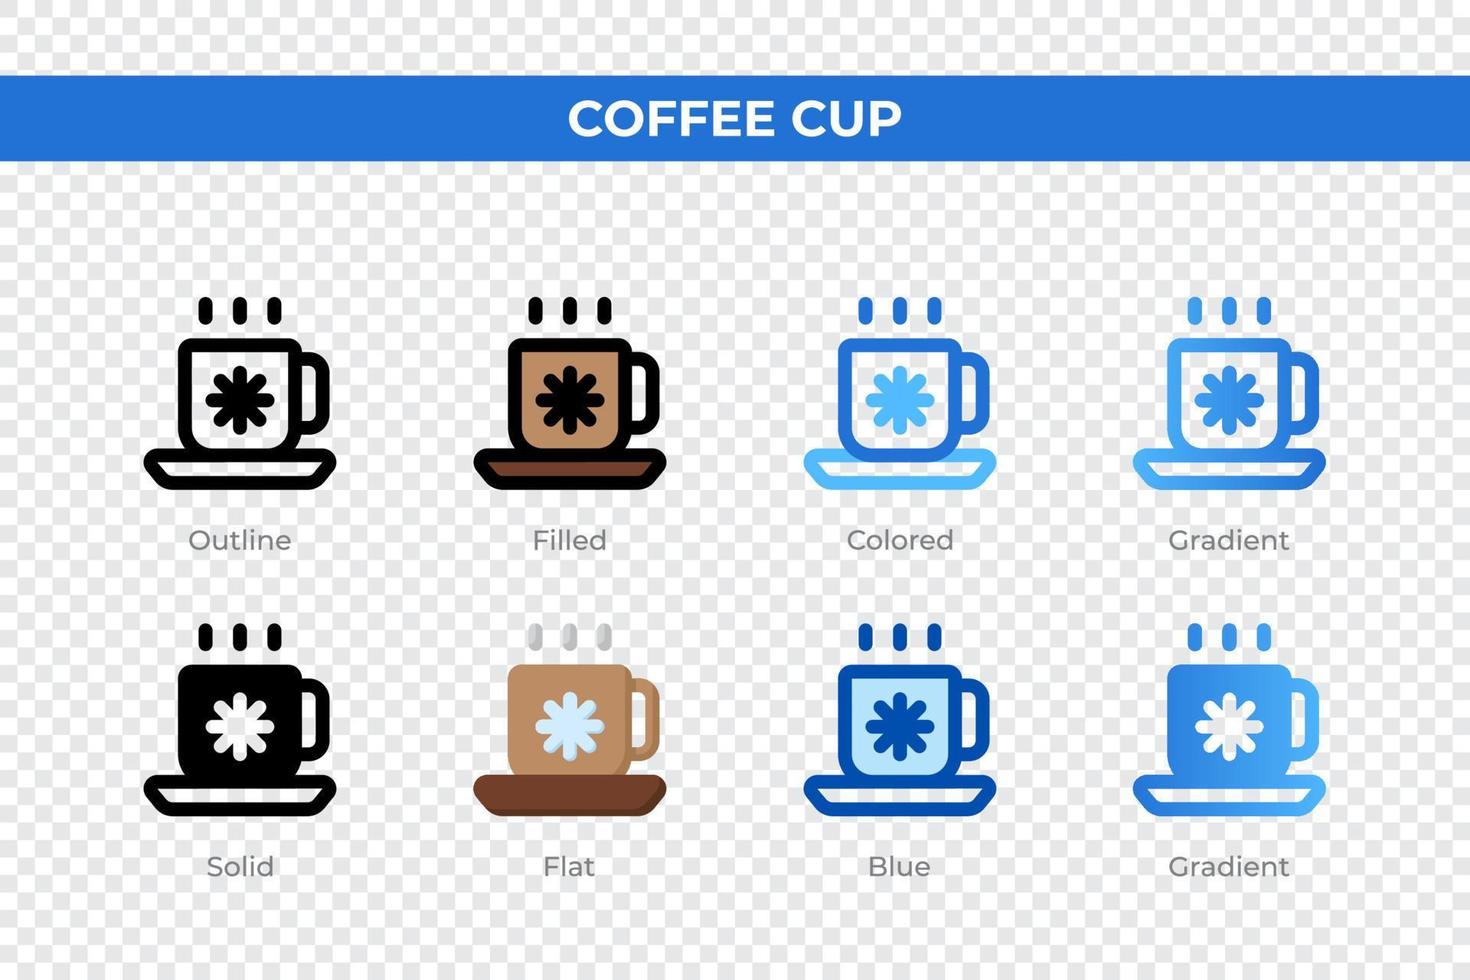 koffie kop pictogrammen in verschillend stijl. koffie kop pictogrammen set. vakantie symbool. verschillend stijl pictogrammen set. vector illustratie